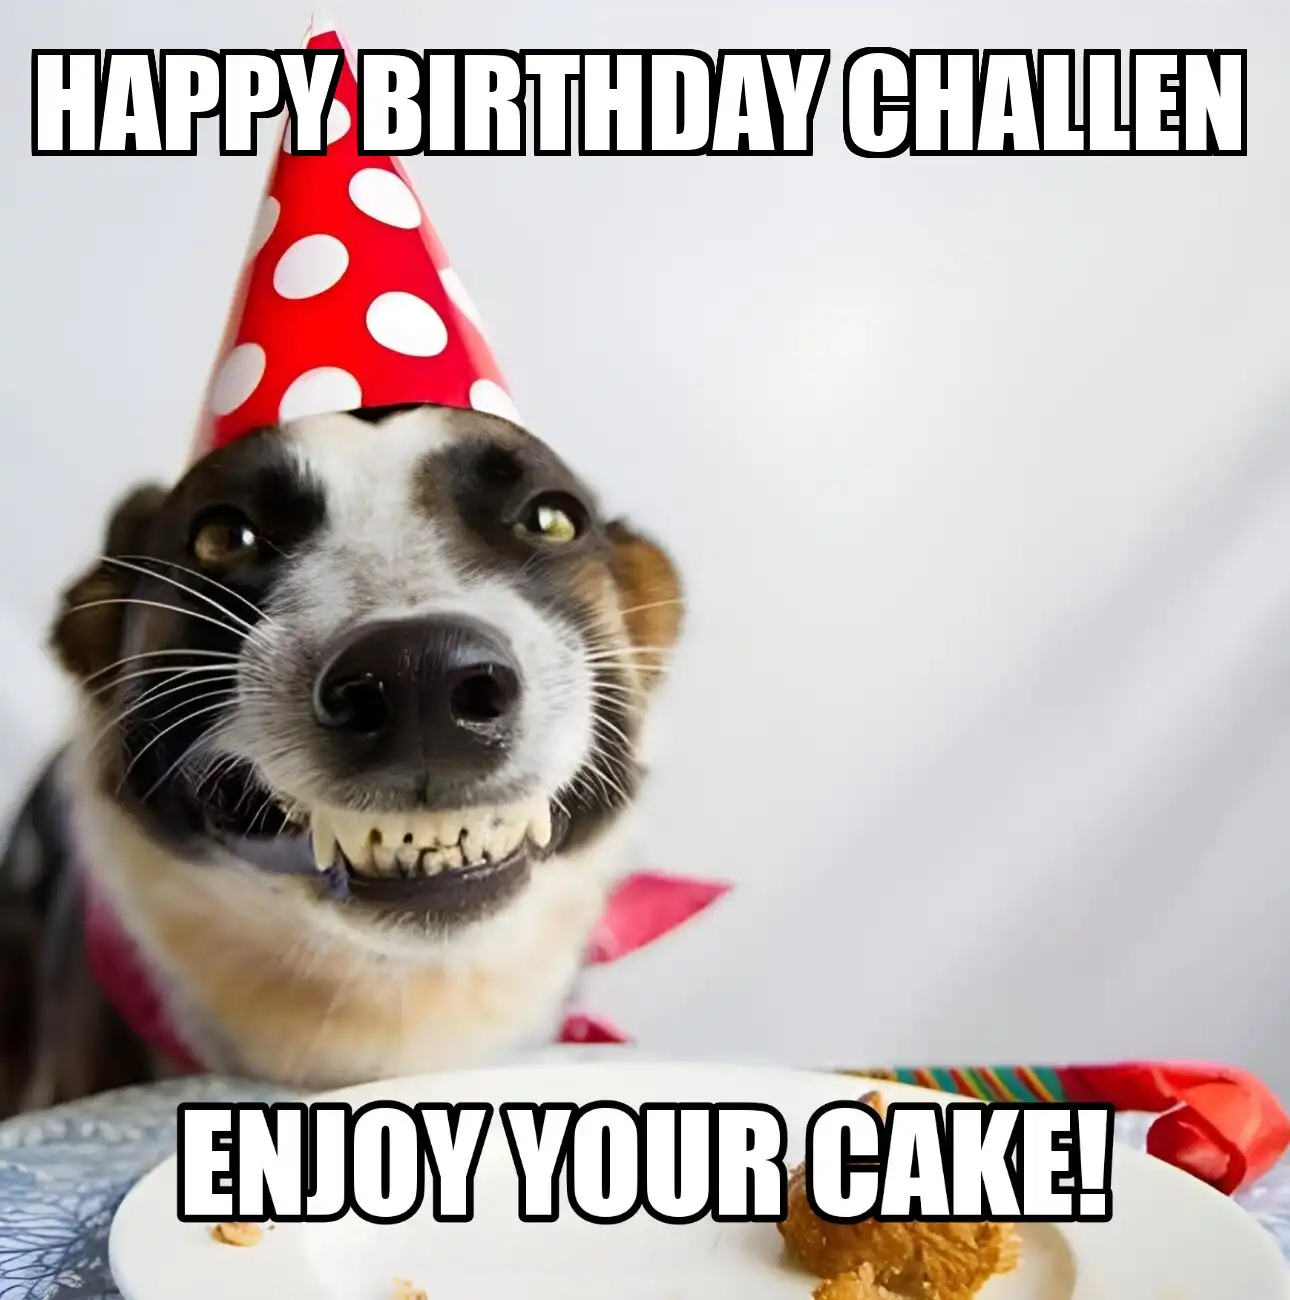 Happy Birthday Challen Enjoy Your Cake Dog Meme